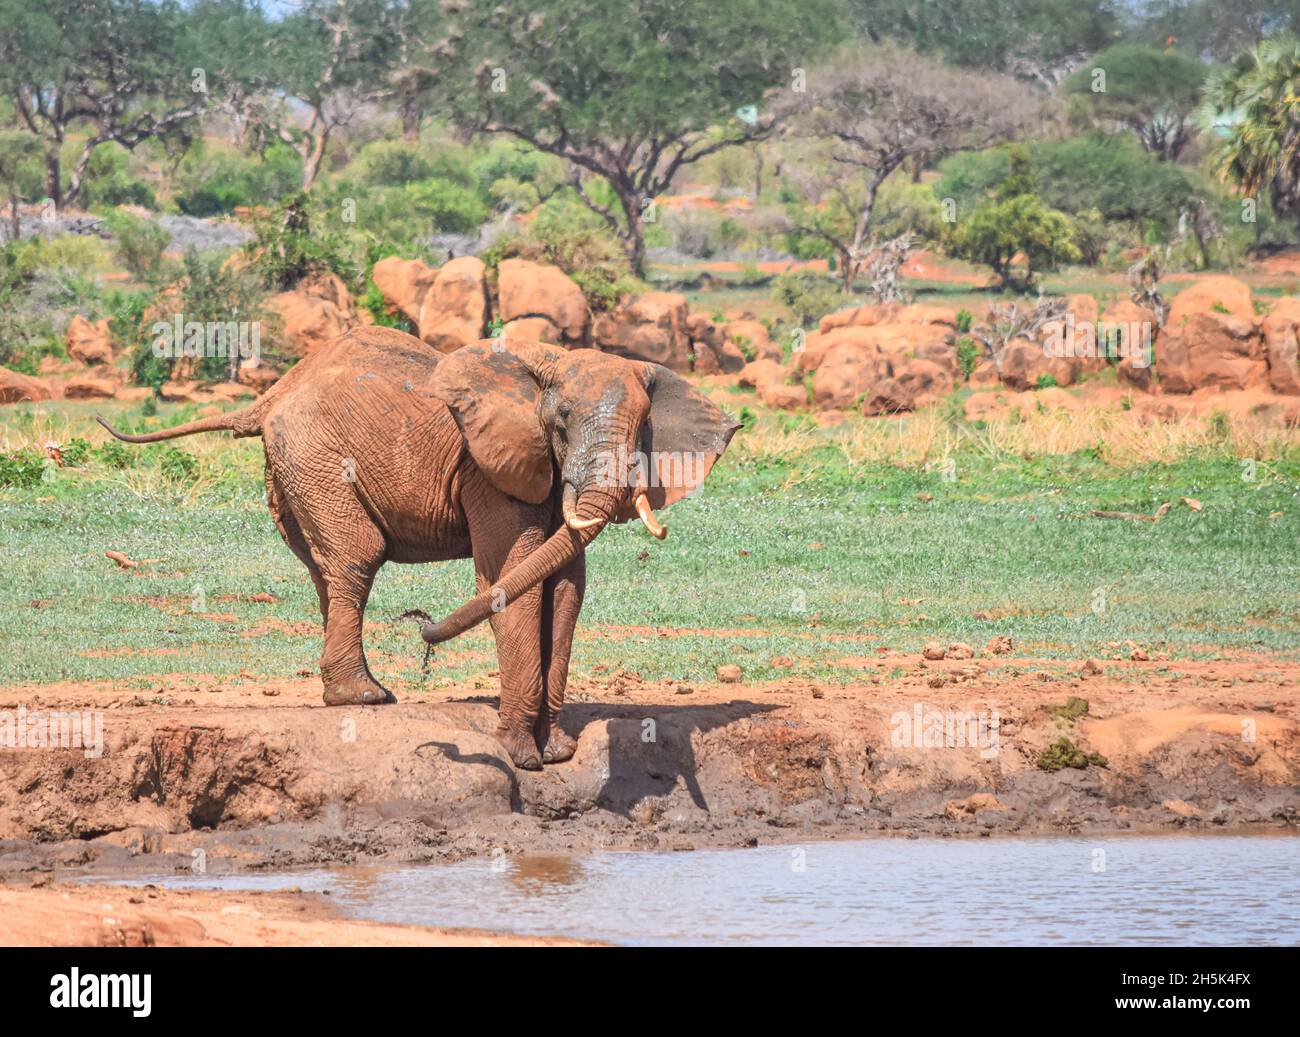 Big bull elefante (Loxodonta africana) spruzzando acqua fangosa su di sé in un varco. Tsavo East National Park, Kenya. Foto Stock